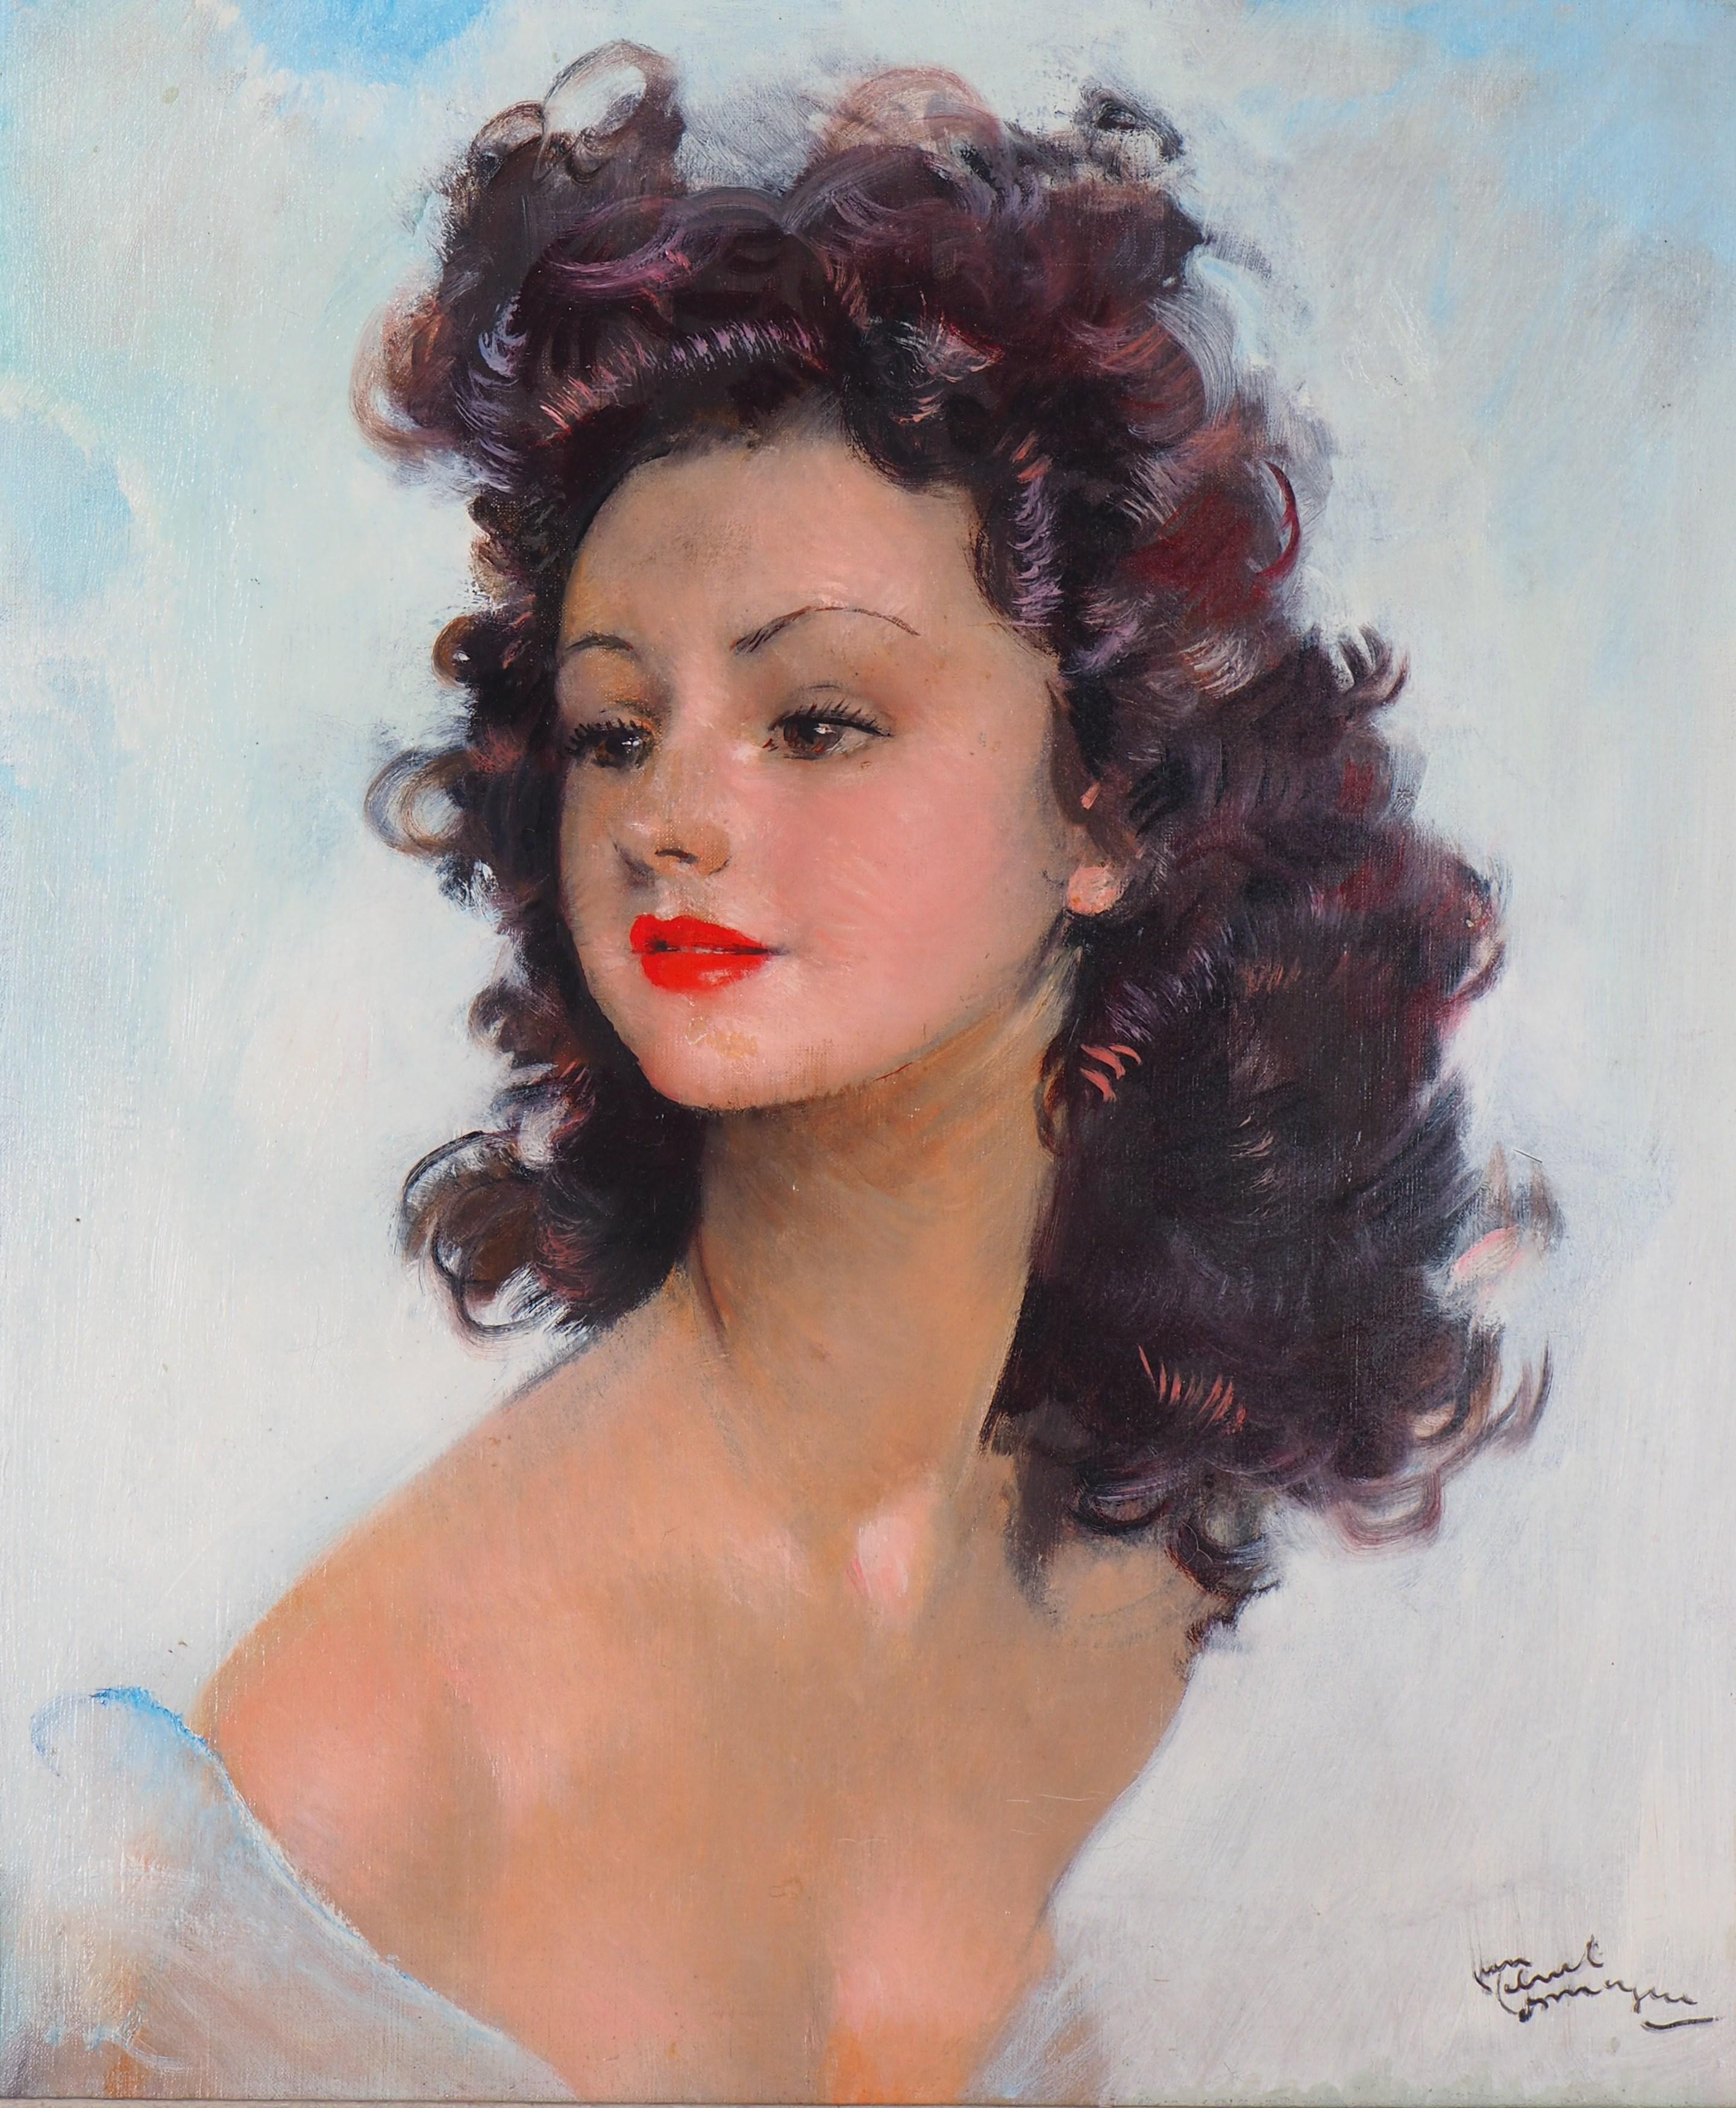 Jean-Gabriel Domergue Portrait Painting - The Red Lipstick : Smiling Model - Original handsigned Oil on Canvas